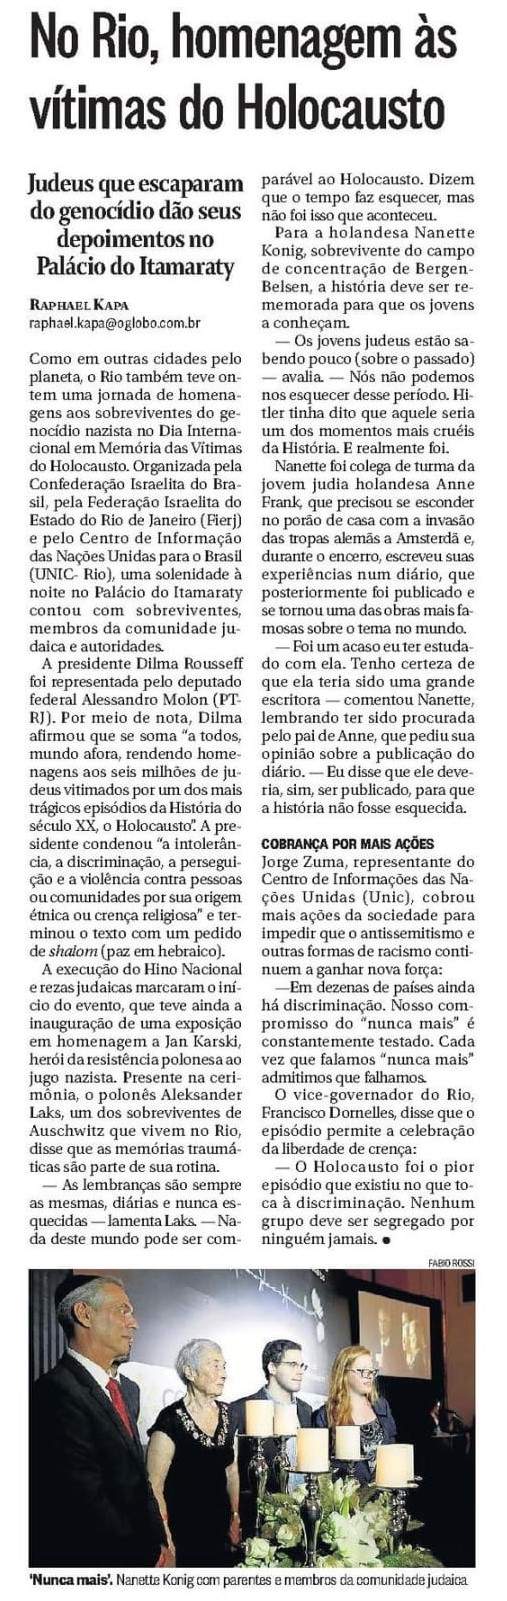 Jornal O Globo - 28 de Janeiro de 2015, Matutina, Sociedade